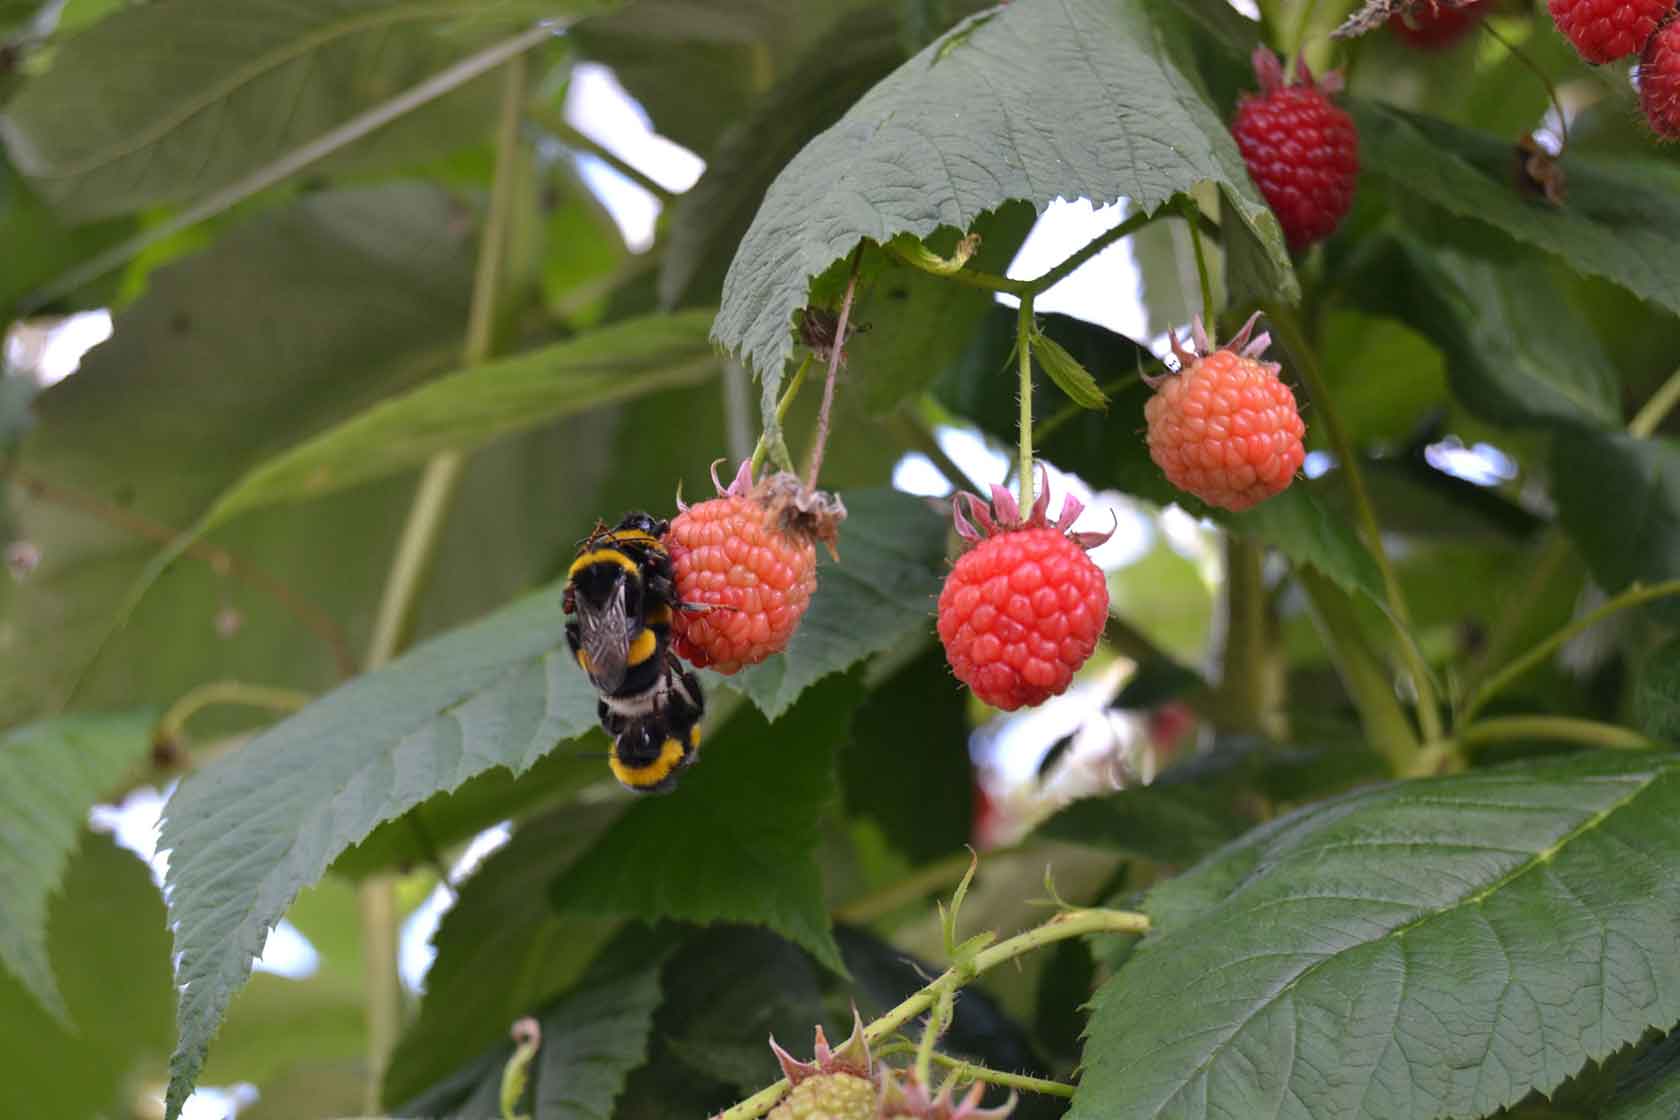 raspberries pollination hydroponic tancredi